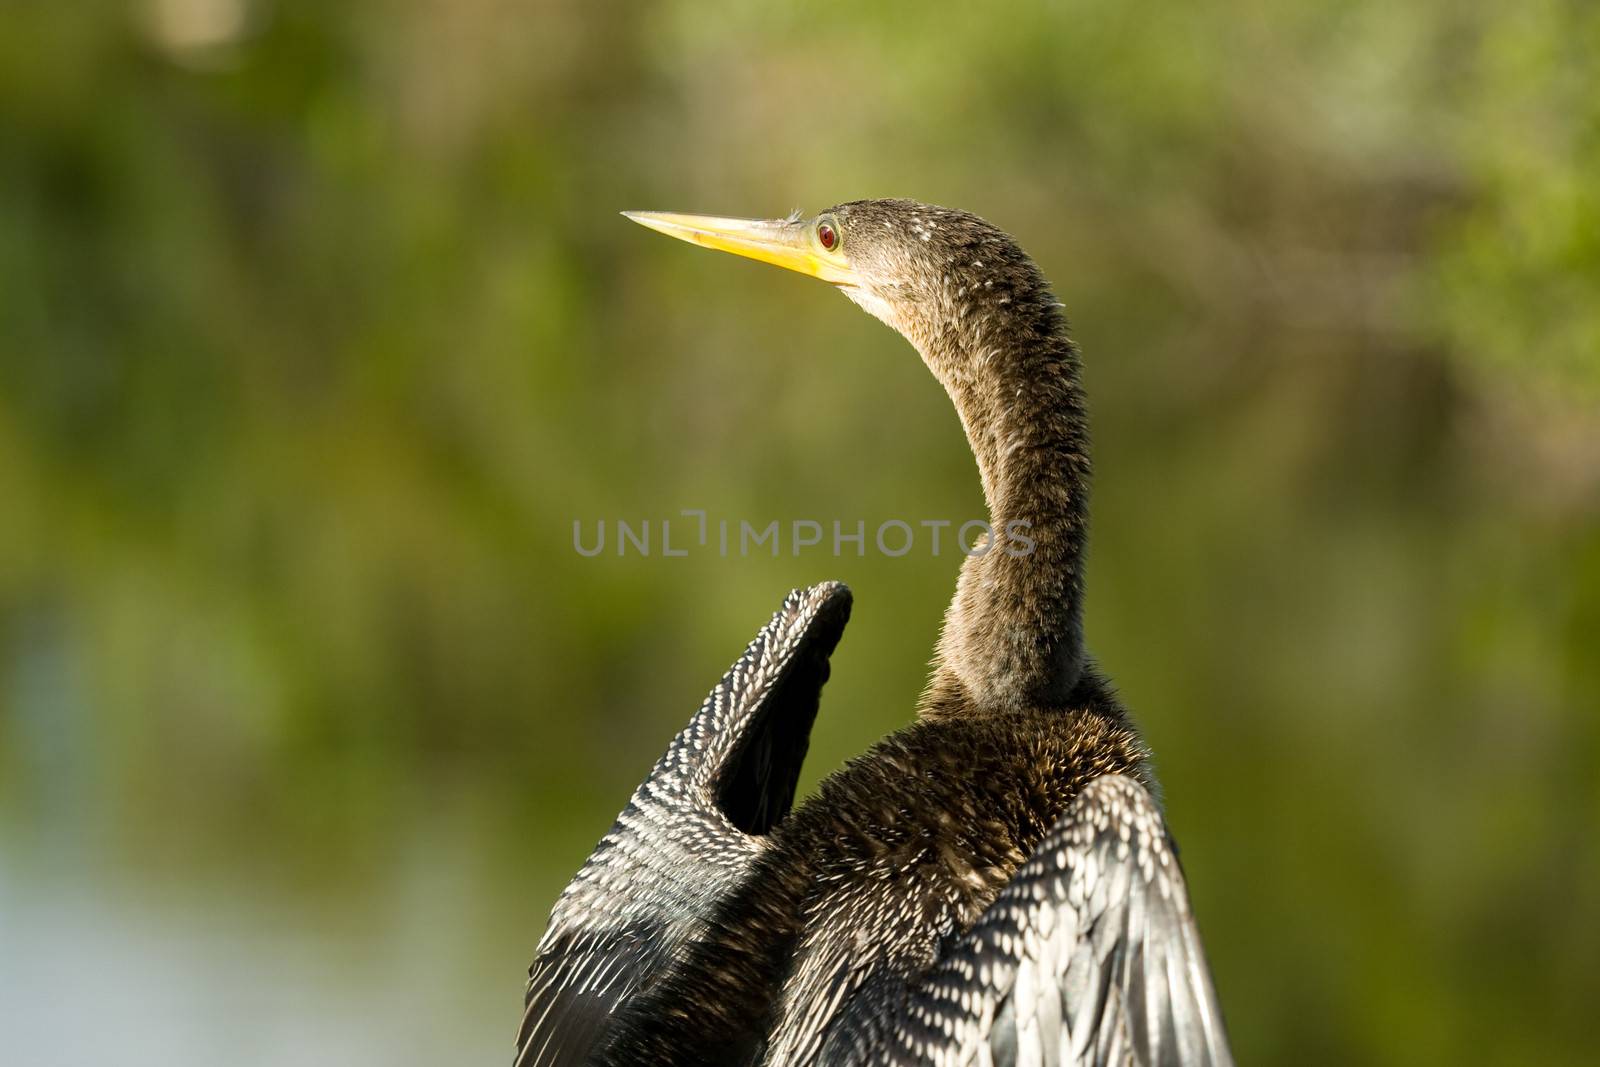 Bird in Florida Everglades by CelsoDiniz